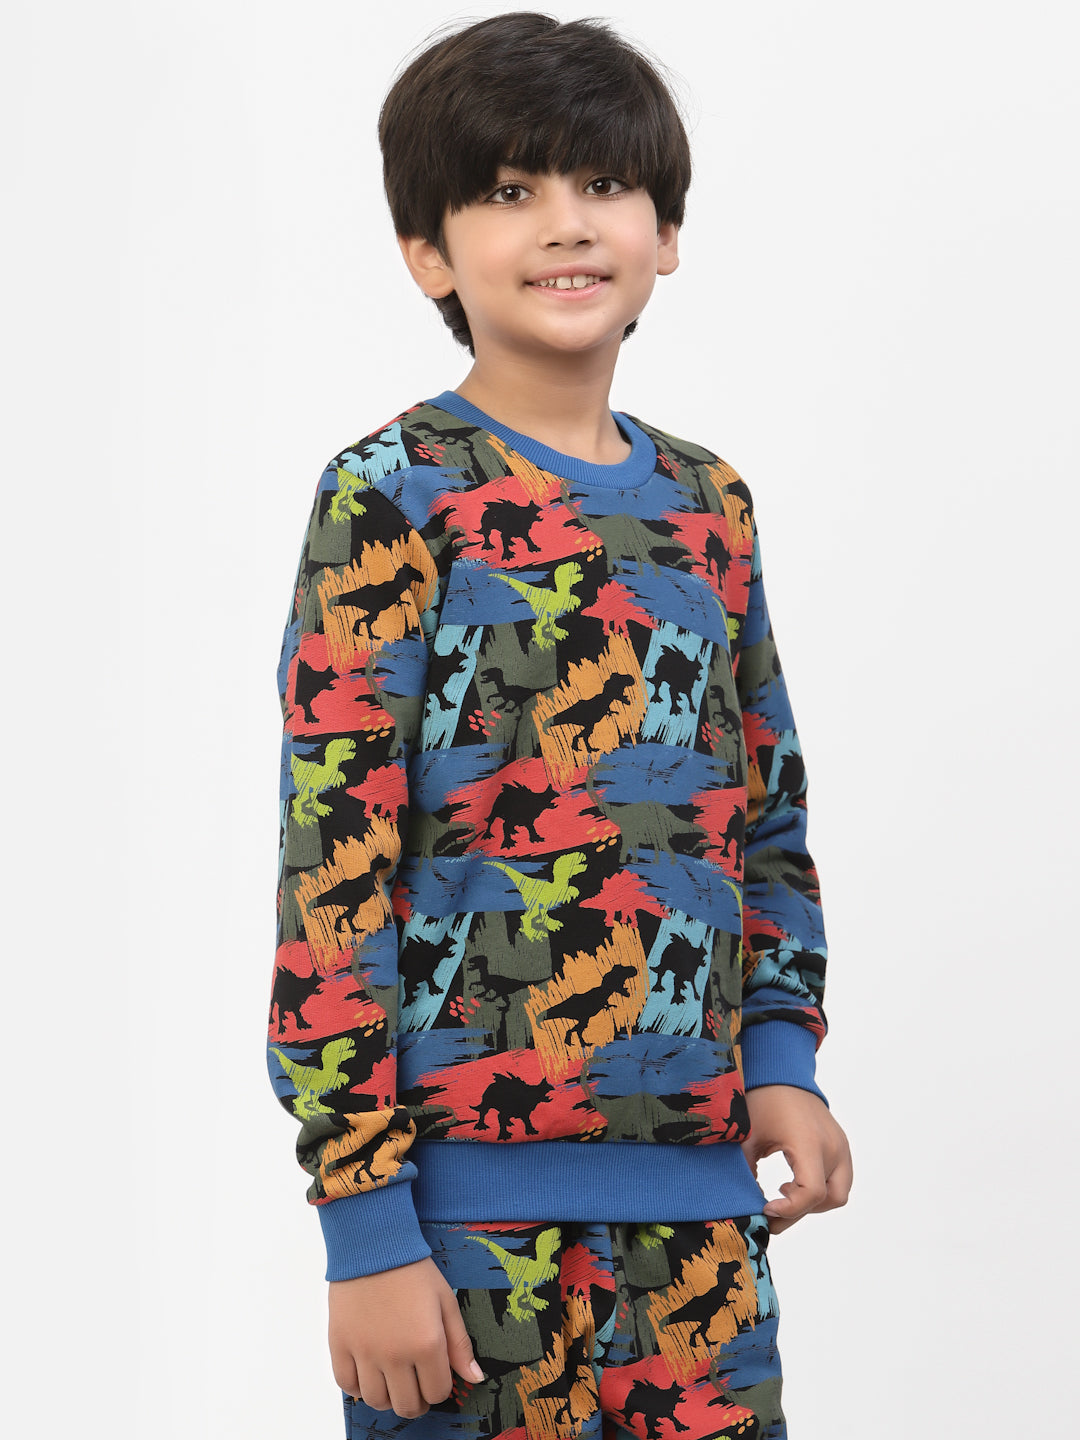 Spunkies Boys Winter Dinosaur Print Sweatshirt Blue